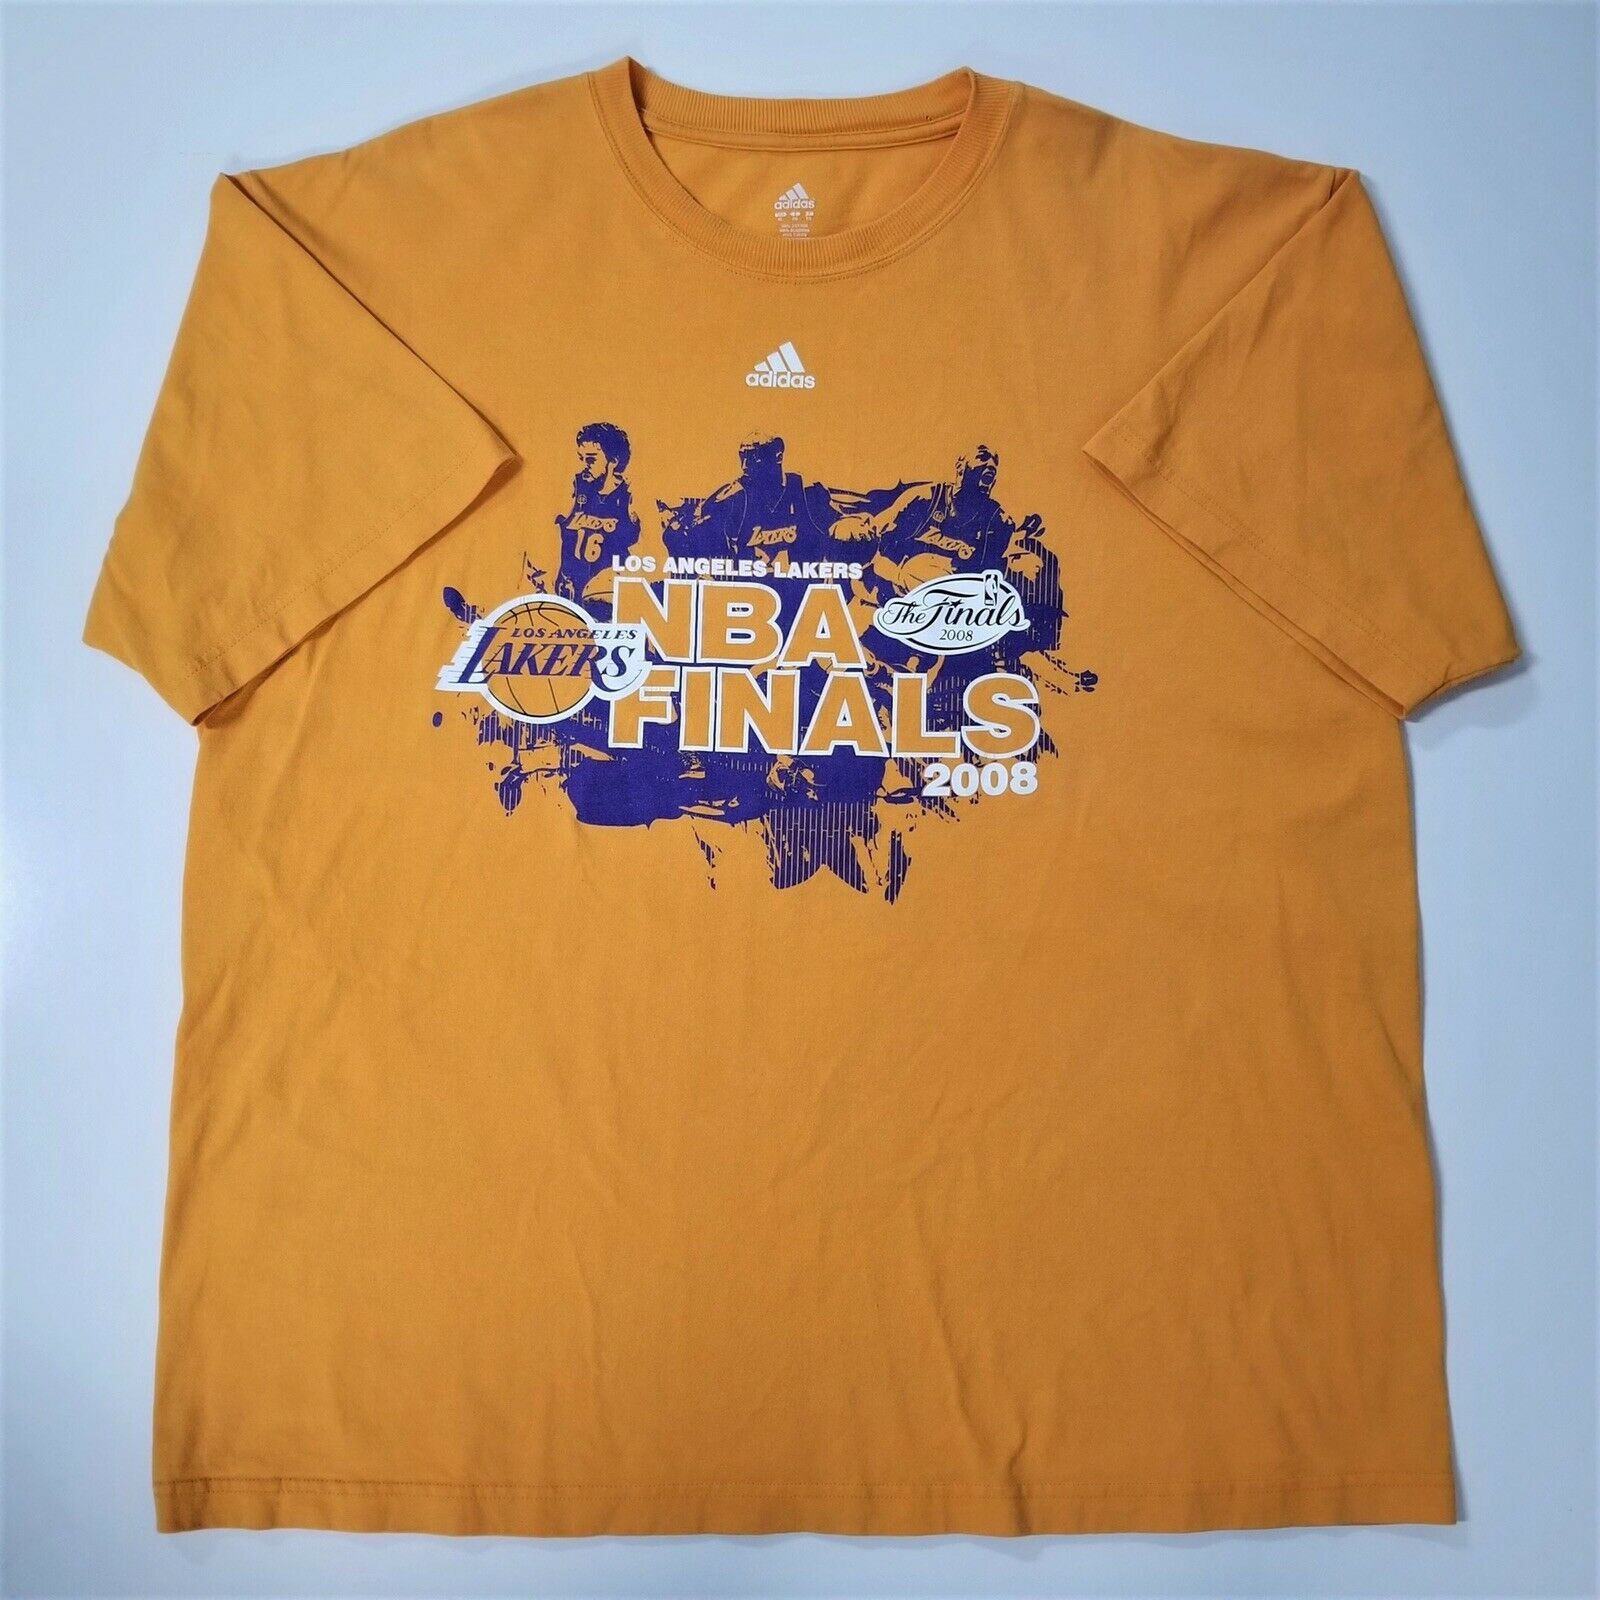 Adidas ADIDAS T-Shirt XL KOBE BRYANT #24 NBA Finals Size US XL / EU 56 / 4 - 5 Thumbnail